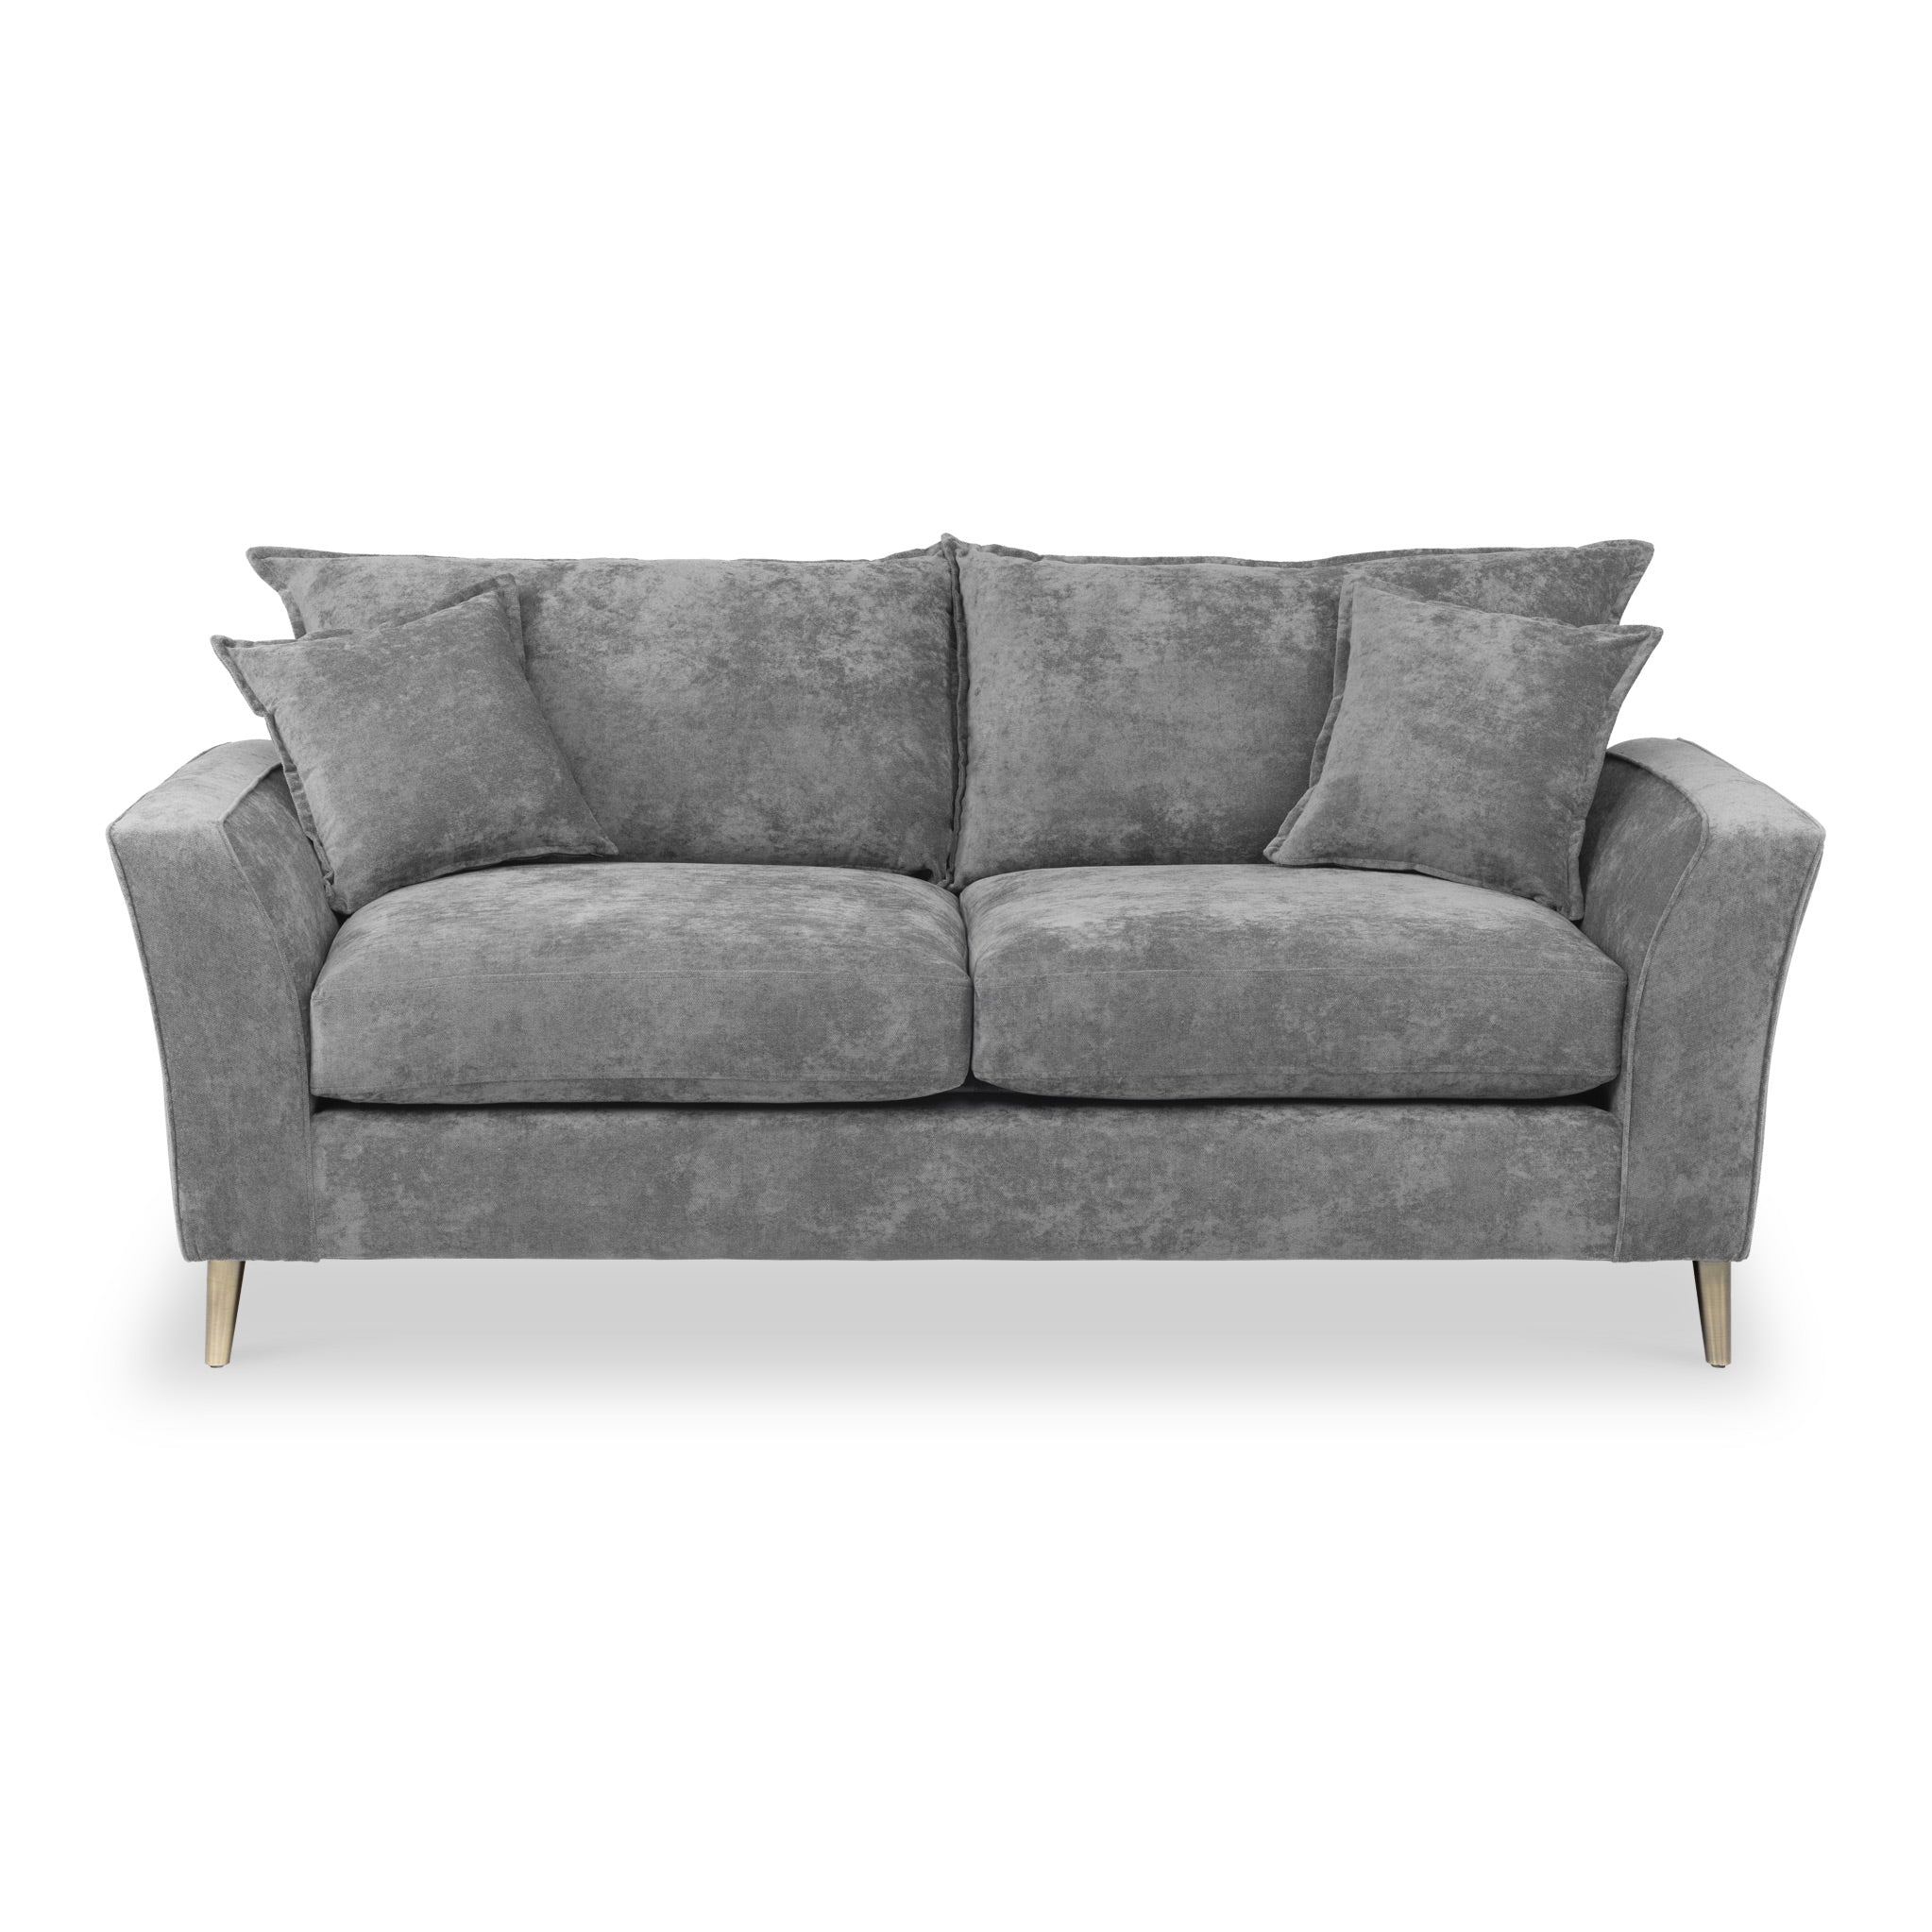 Rupert Pillow Back 3 Seater Sofa 8 Colours Made In Uk Roseland